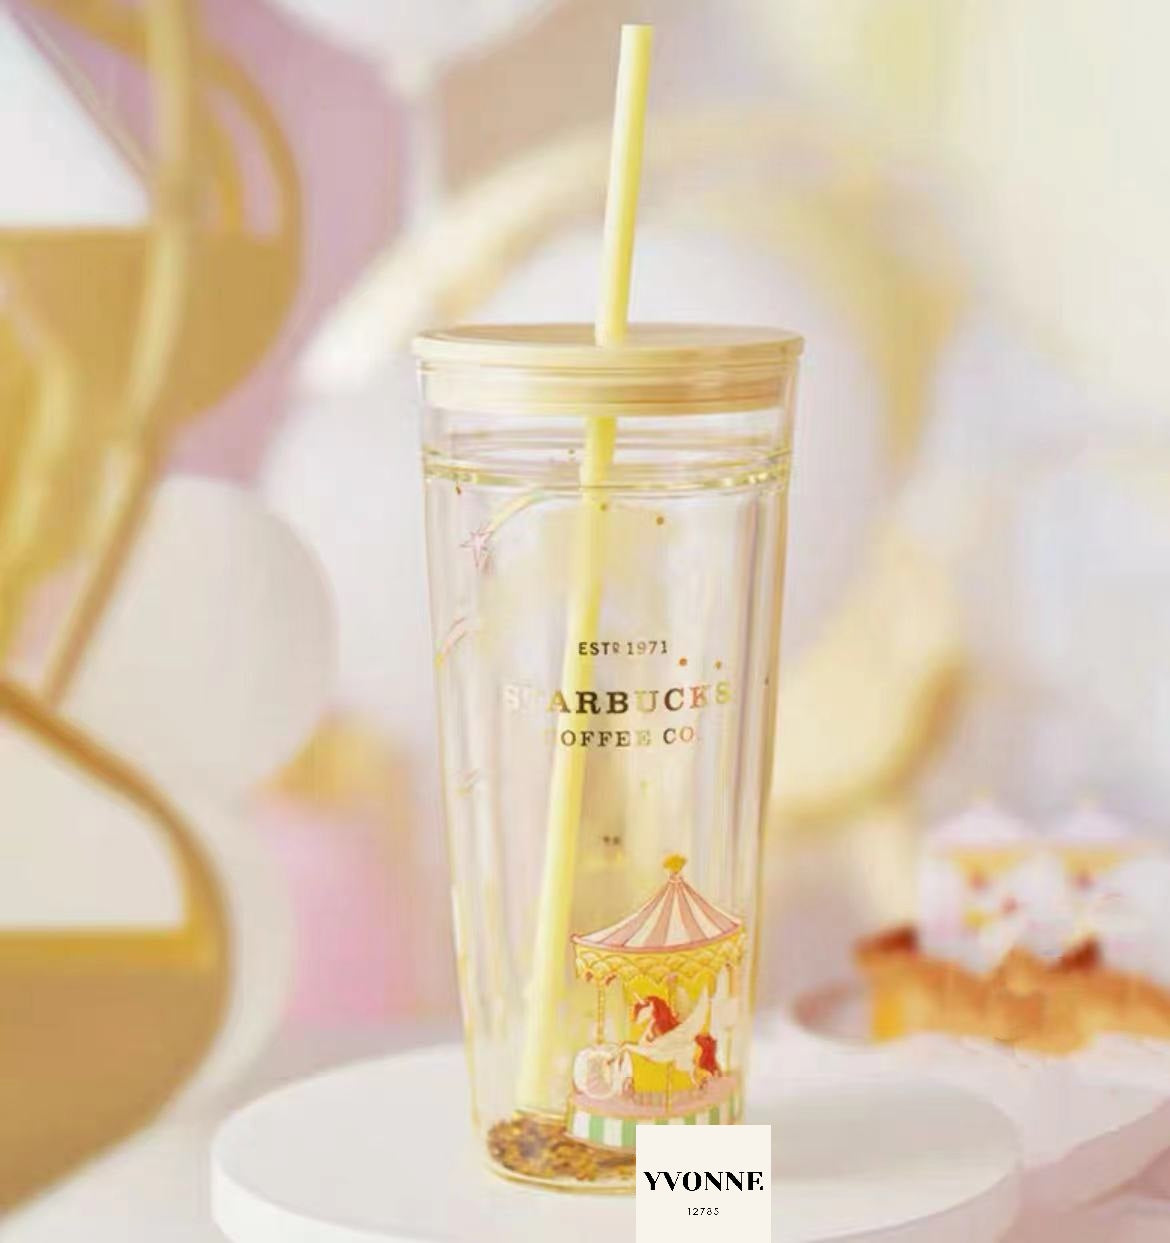 Starbucks China Summer 2021 Camping Bear Shaped Glass 14oz Straw Cup